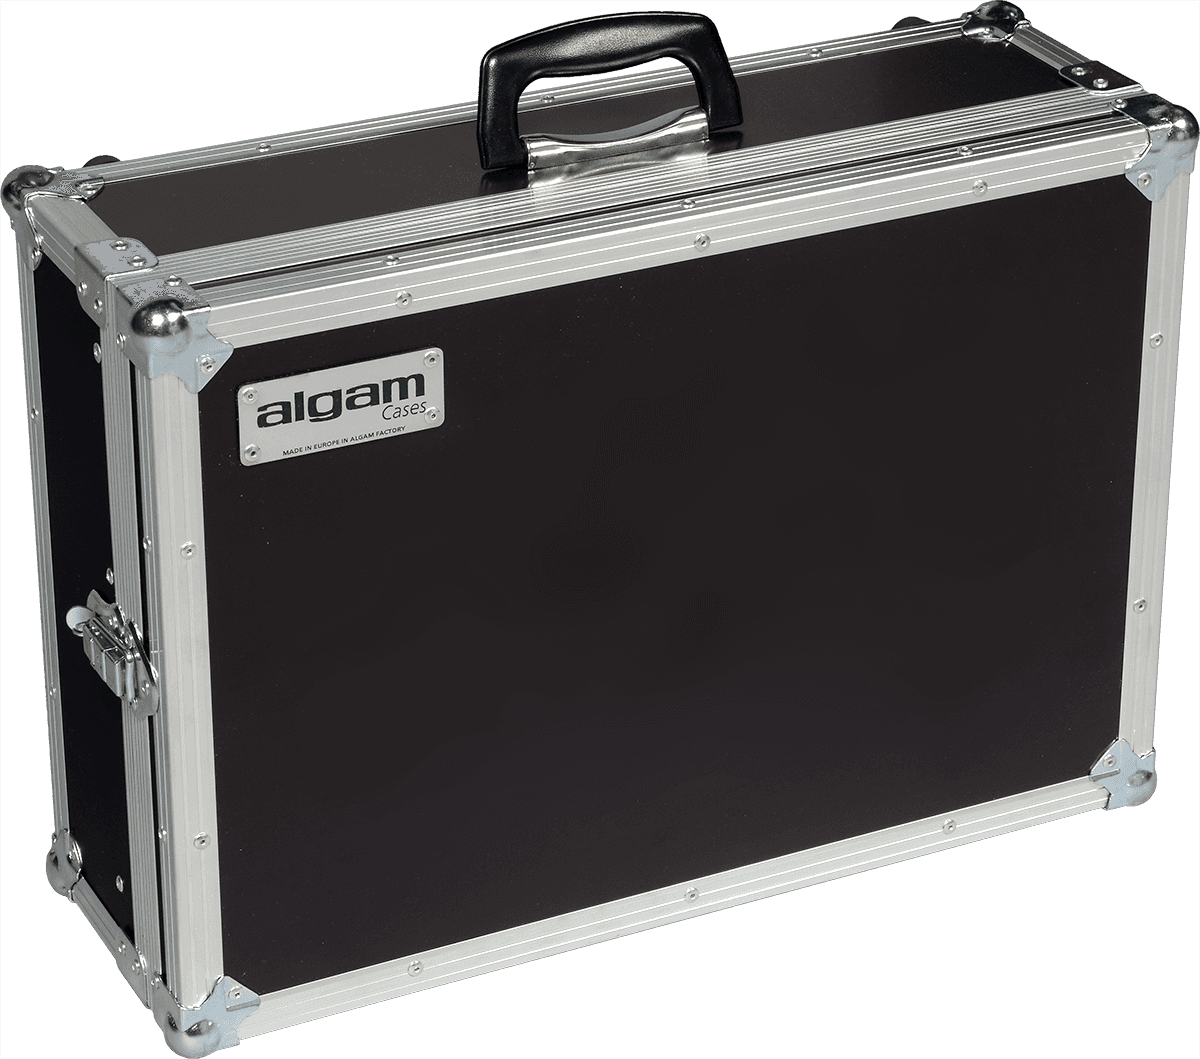 Algam Mixer-8u - Mixer case - Main picture